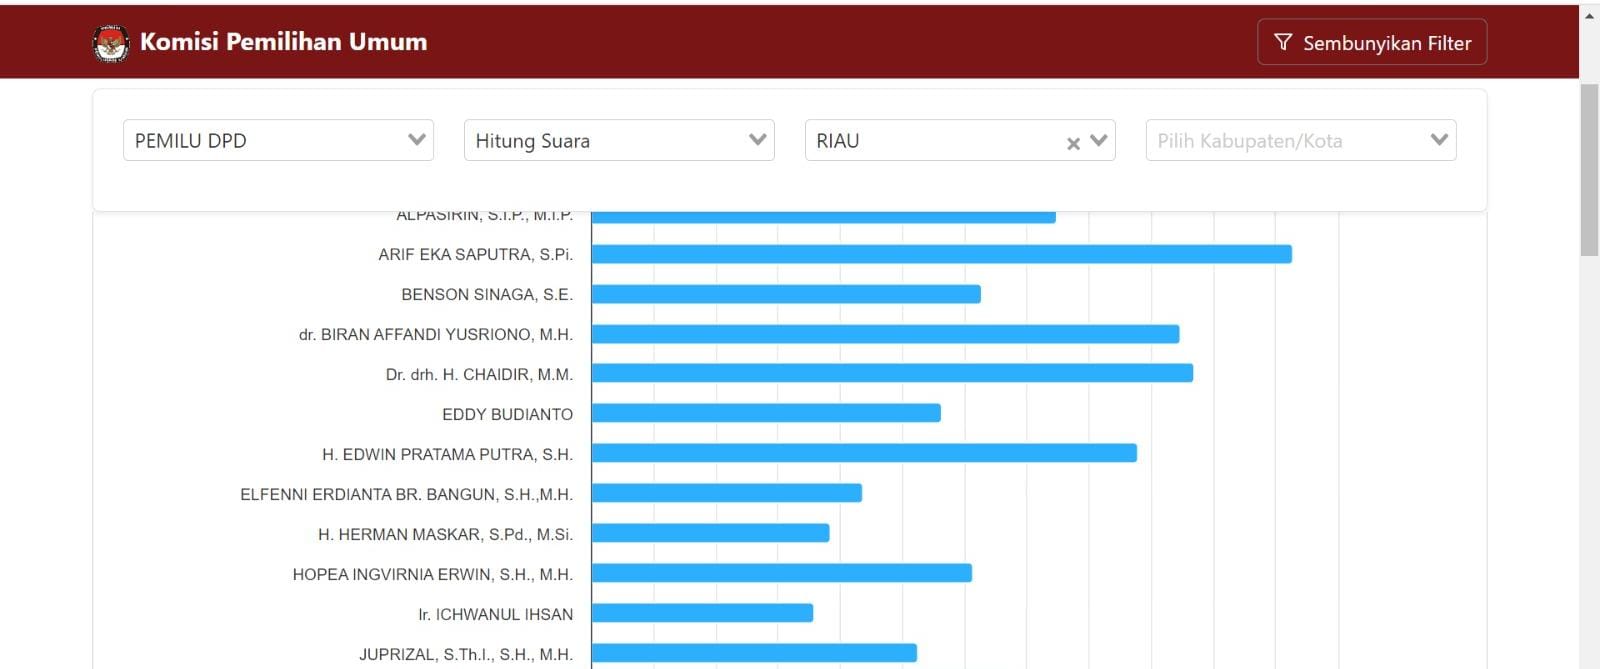 Hasil Perhitungan Suara Sementara DPD Provinsi Riau, Berikut Kandidat dengan Suara Teratas